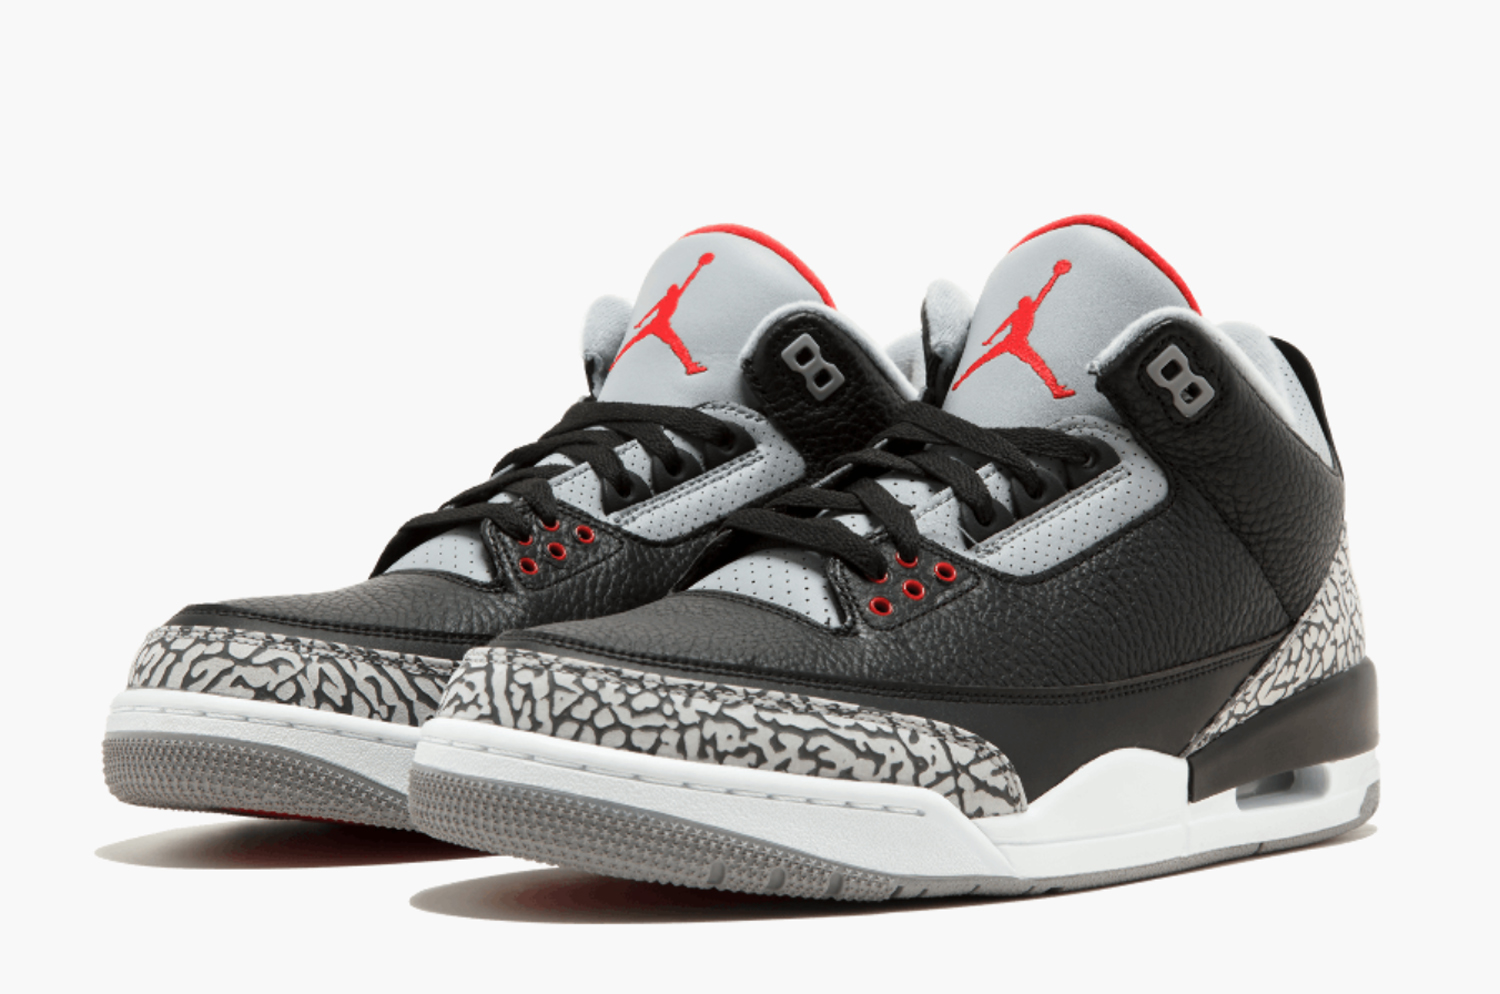 Air Jordan 3 'Black Cement' Retro 